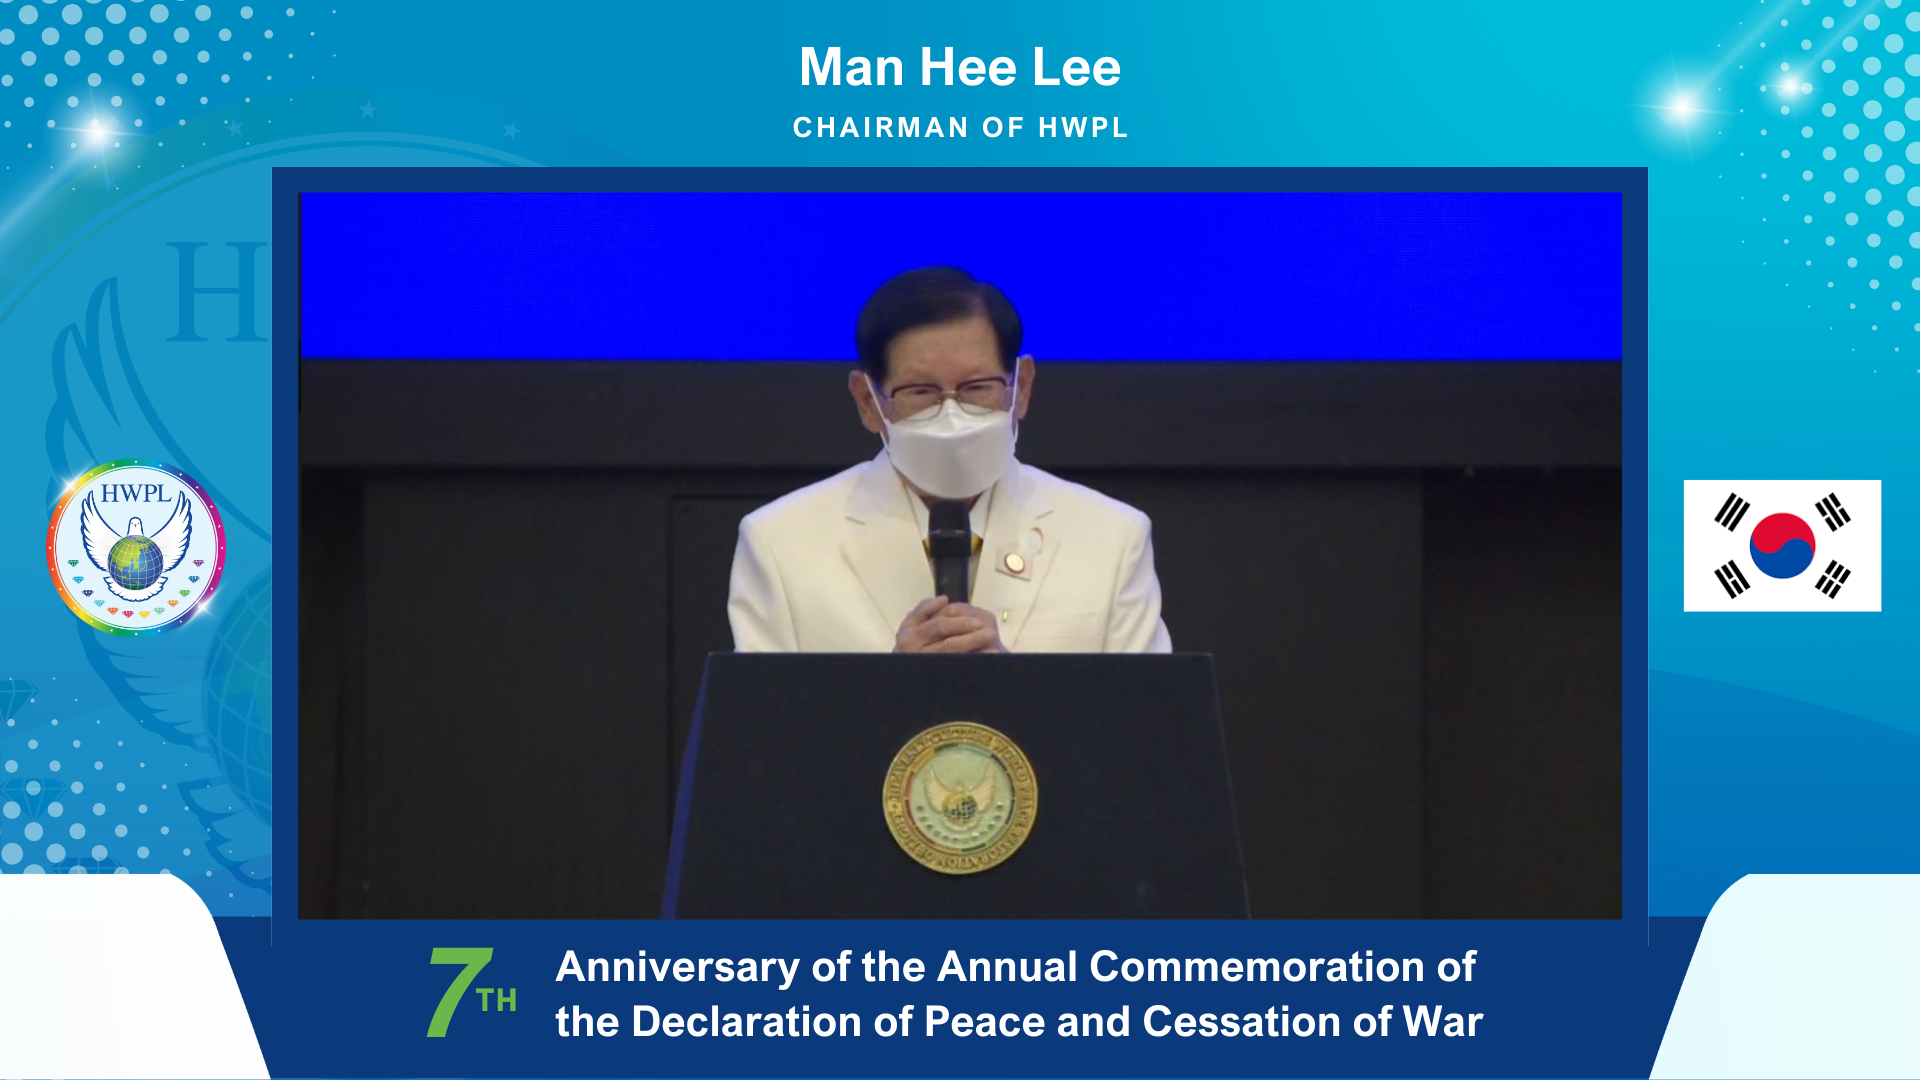 Chairman Man Hee Lee